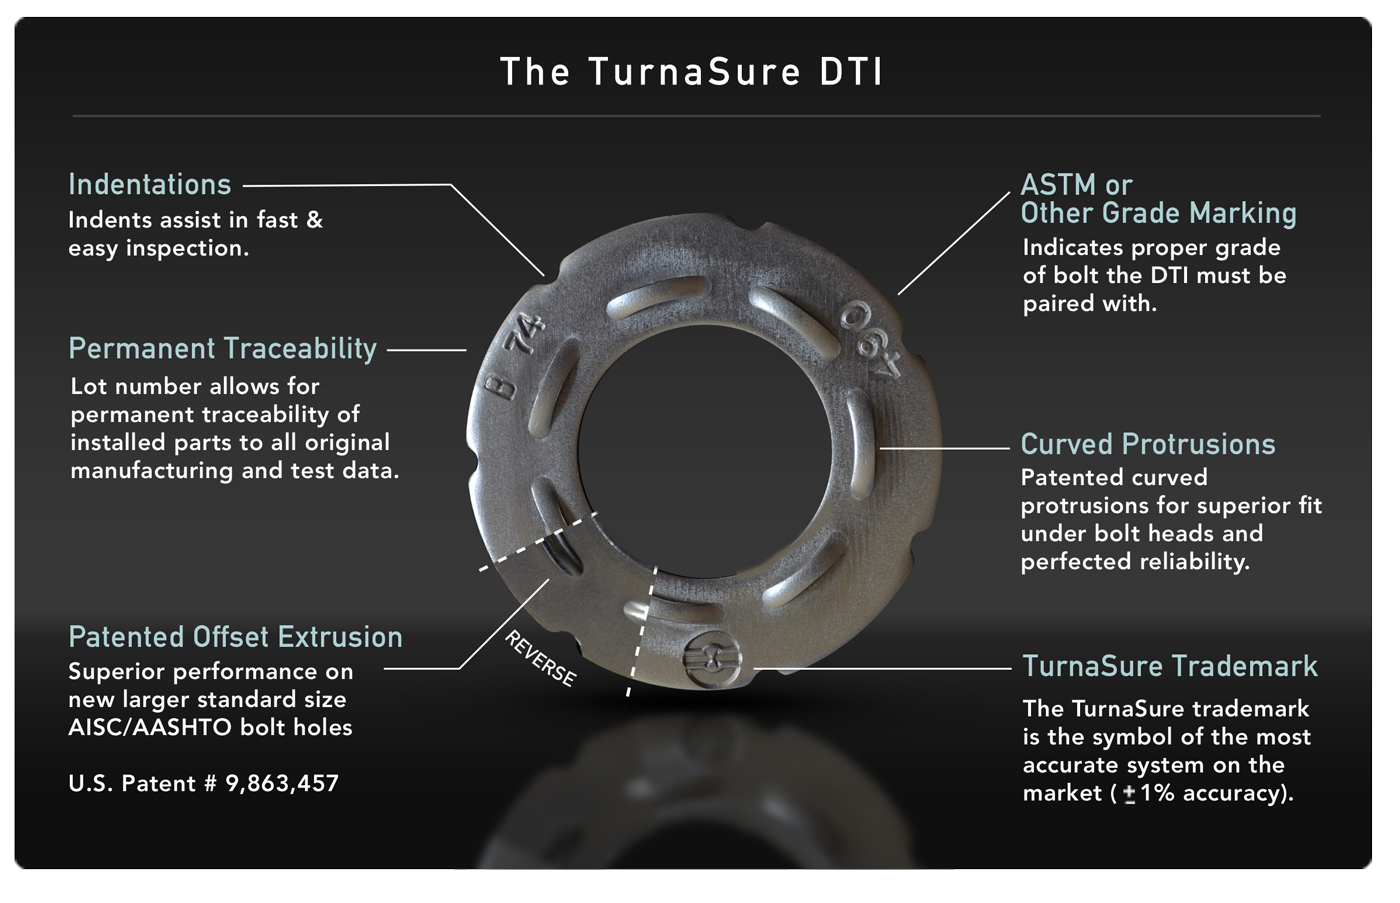 Details of the TurnaSure DTI